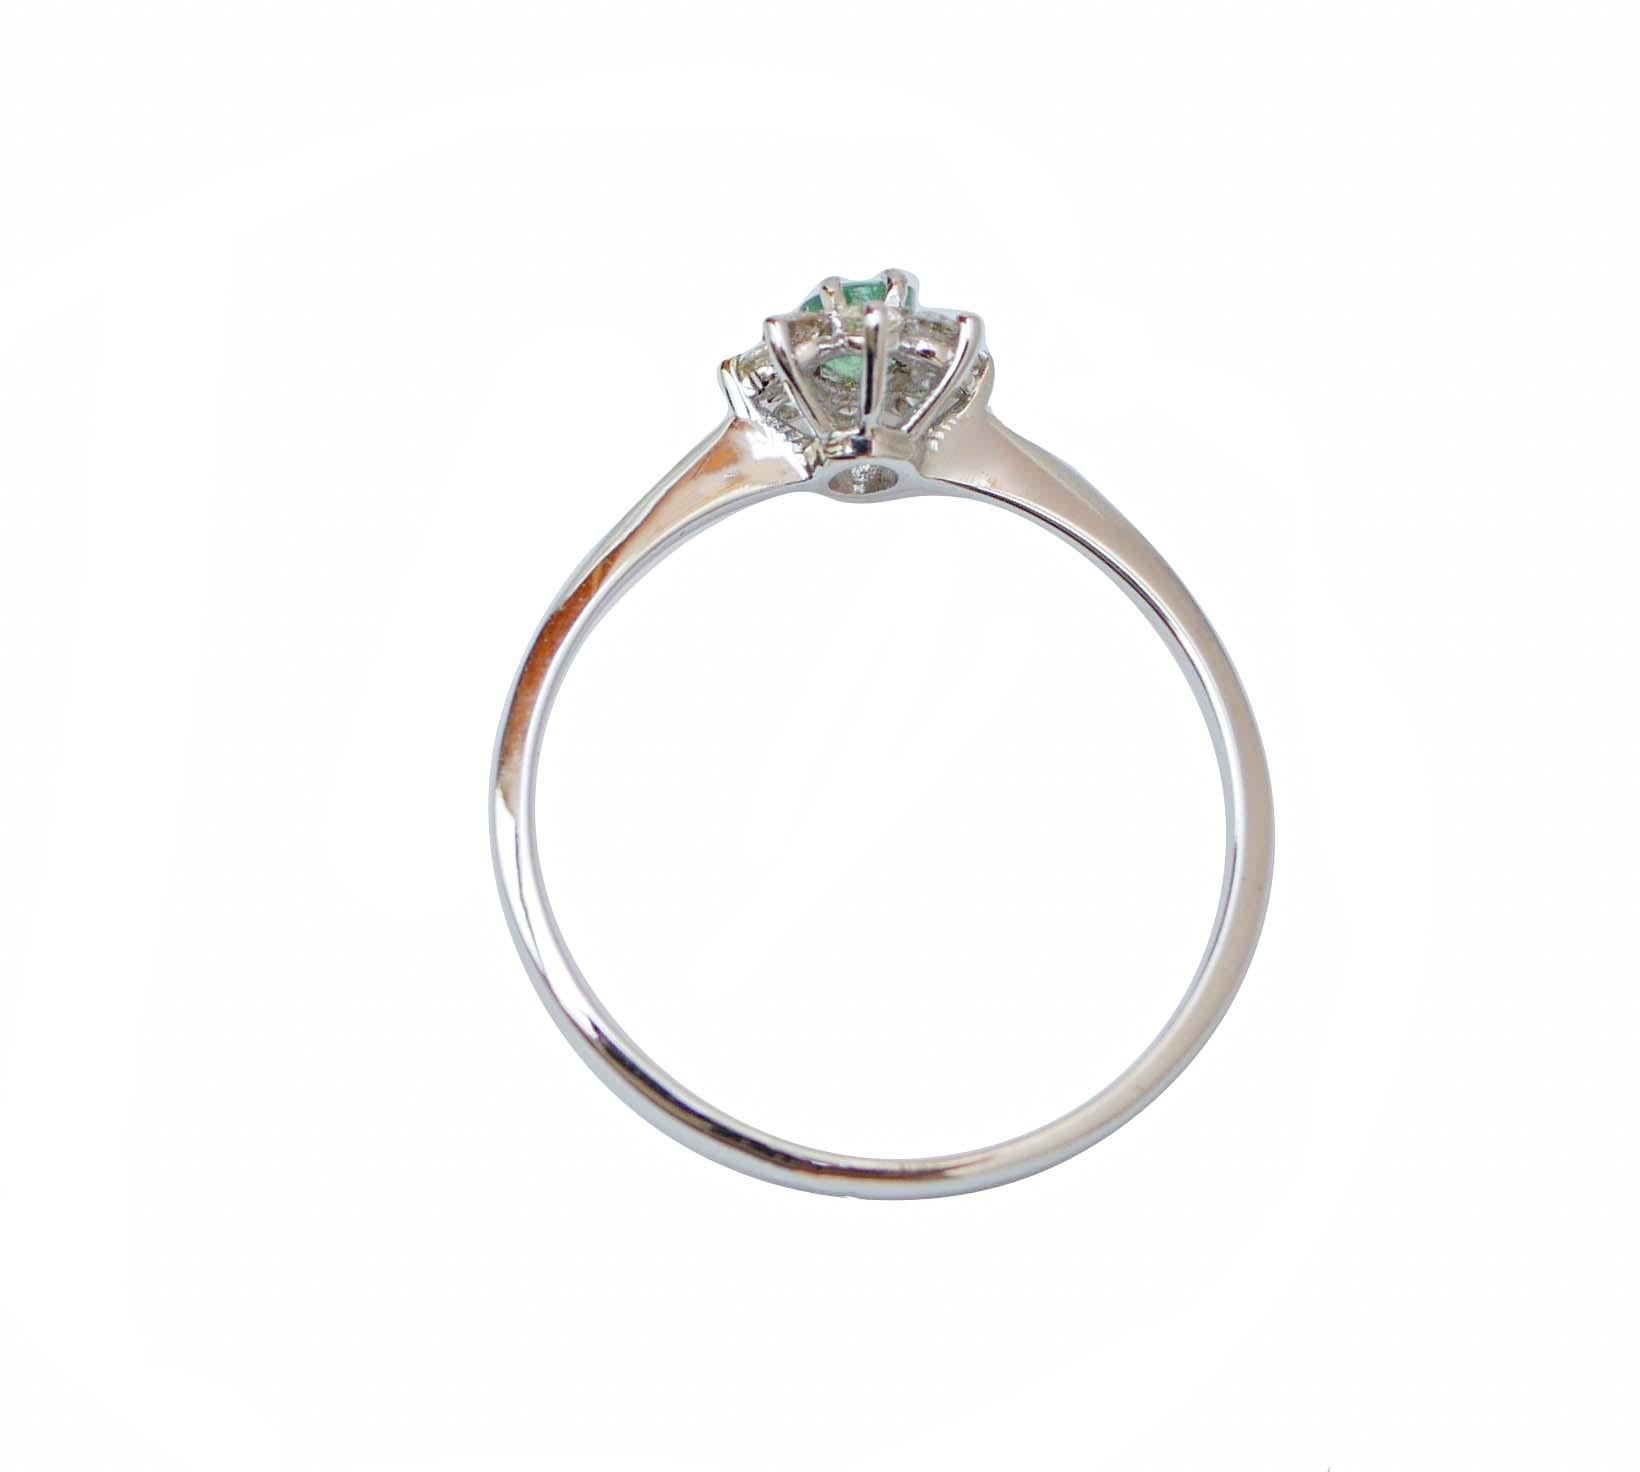 Mixed Cut Emerald, Diamonds, 18 Karat White Gold Modern Ring. For Sale